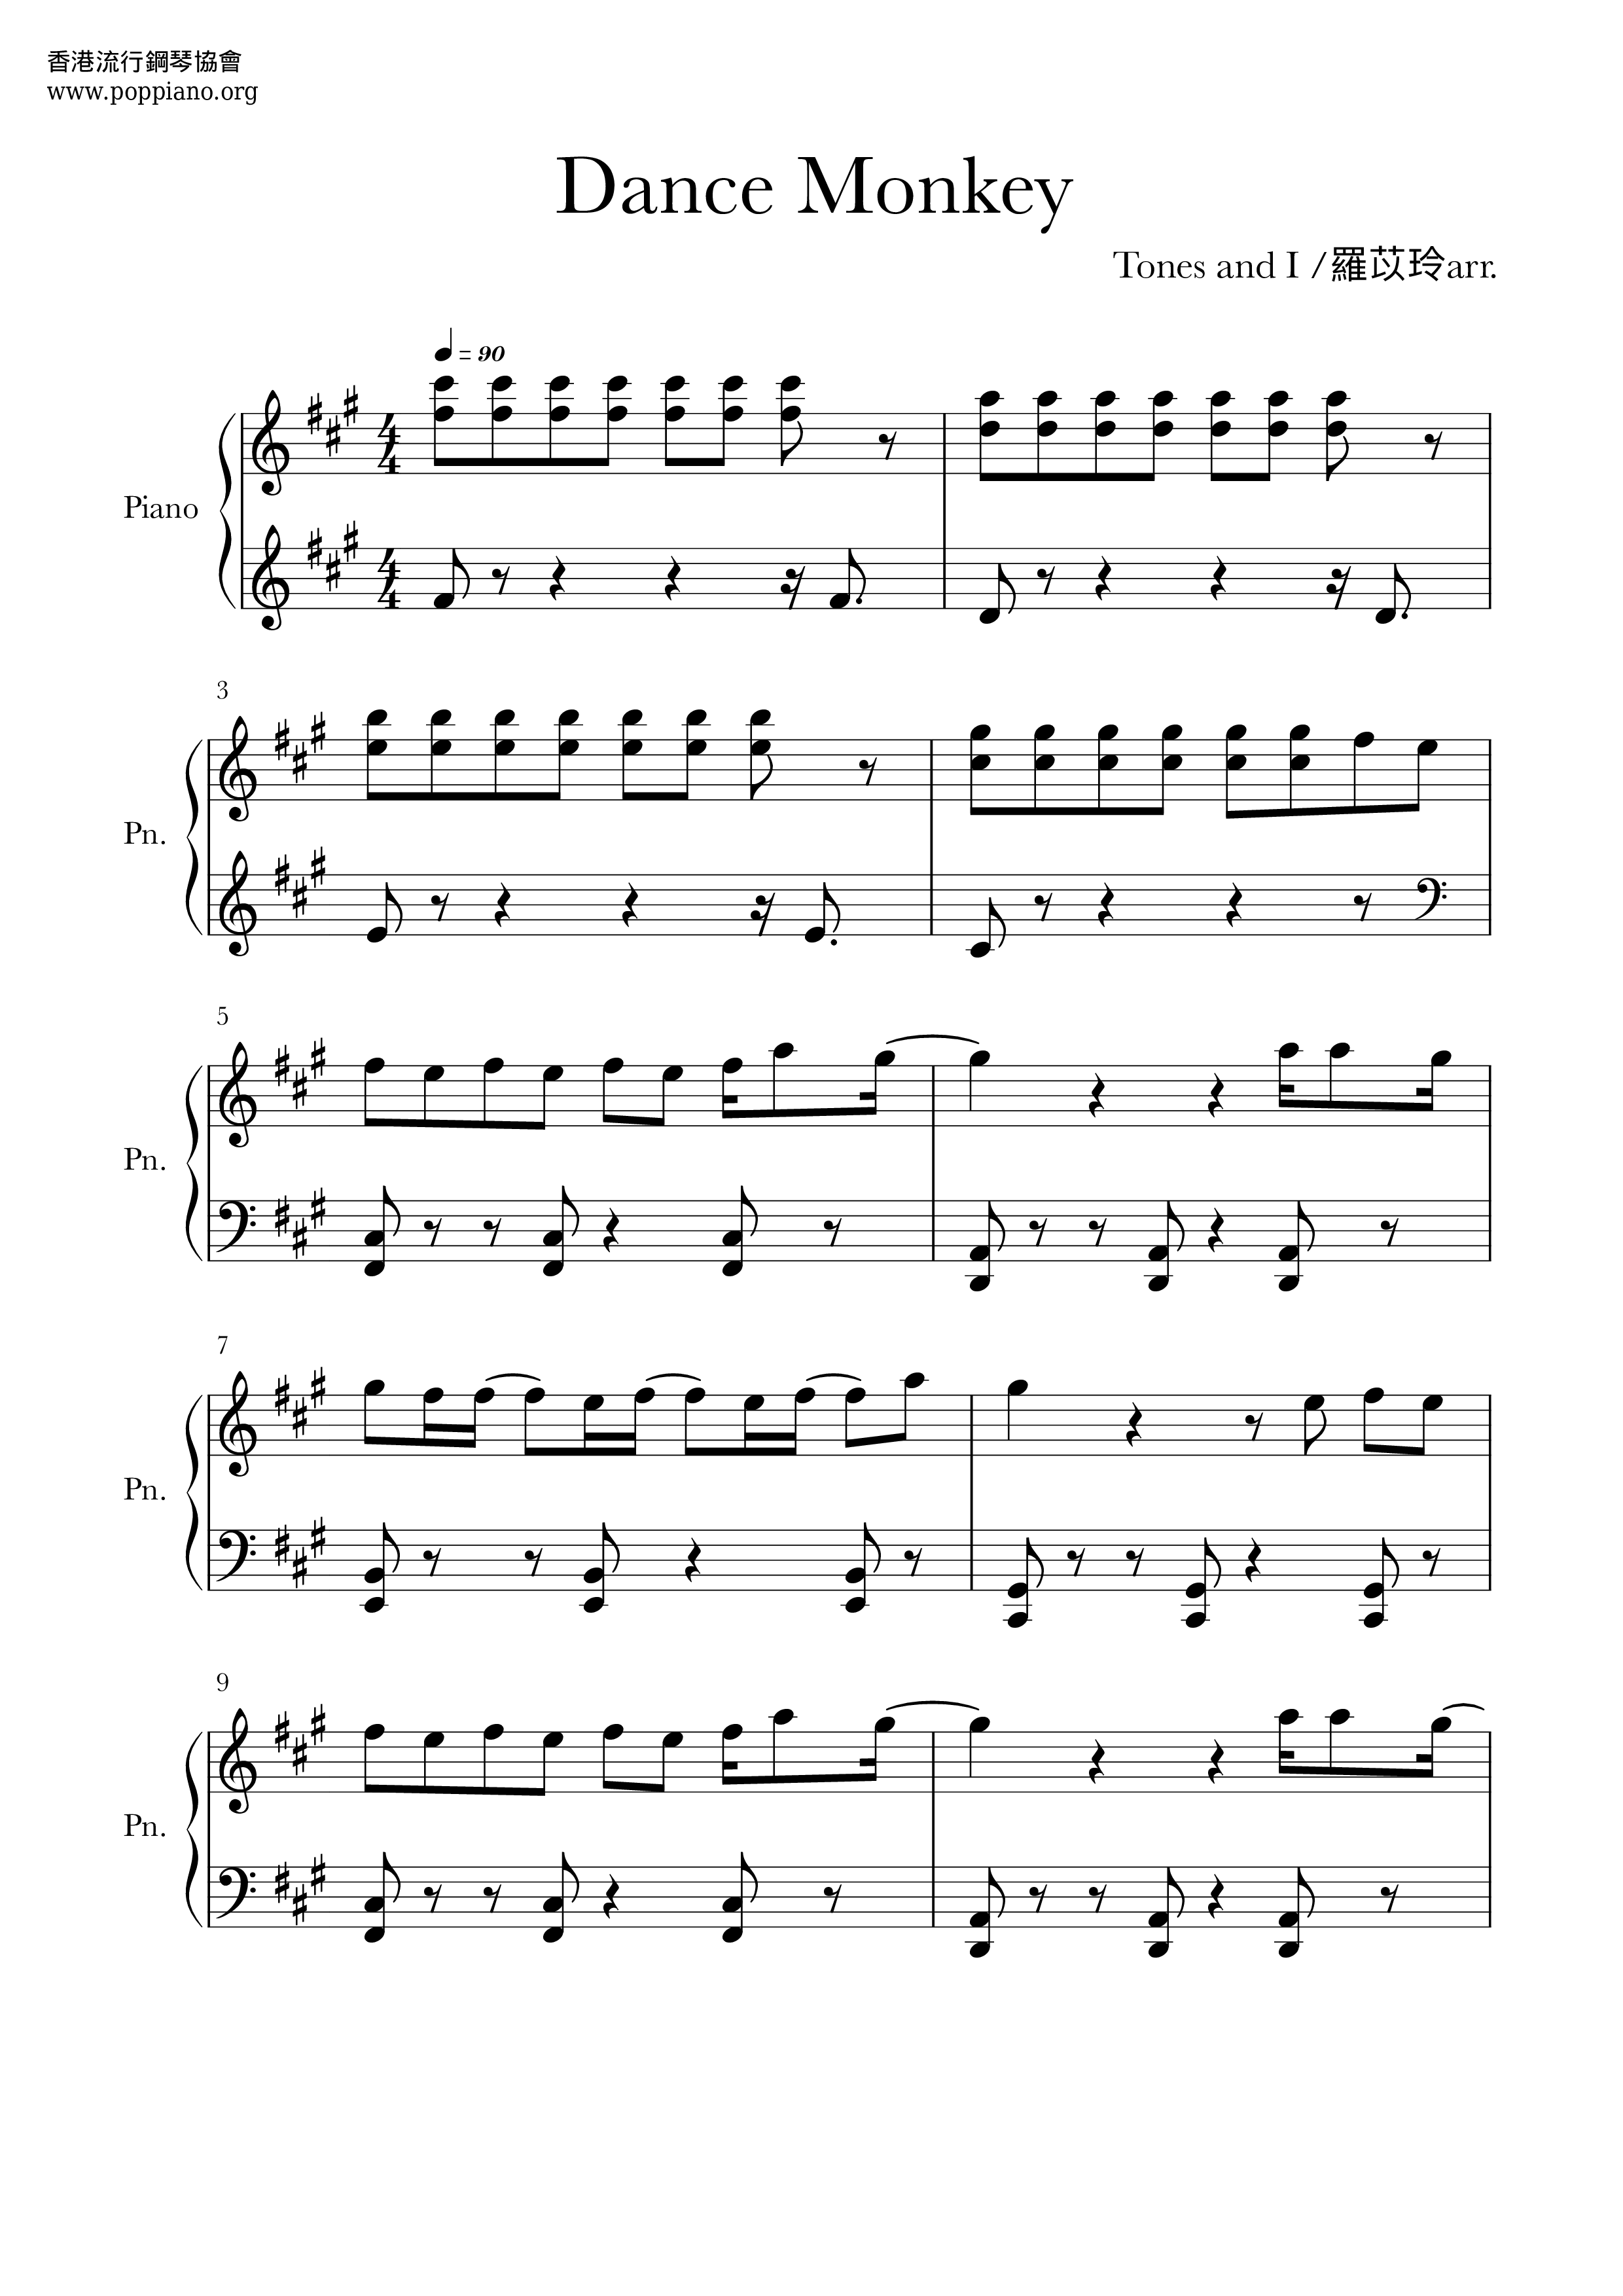 Tones And I-Dance Monkey Sheet Music pdf, - Free Score Download ★